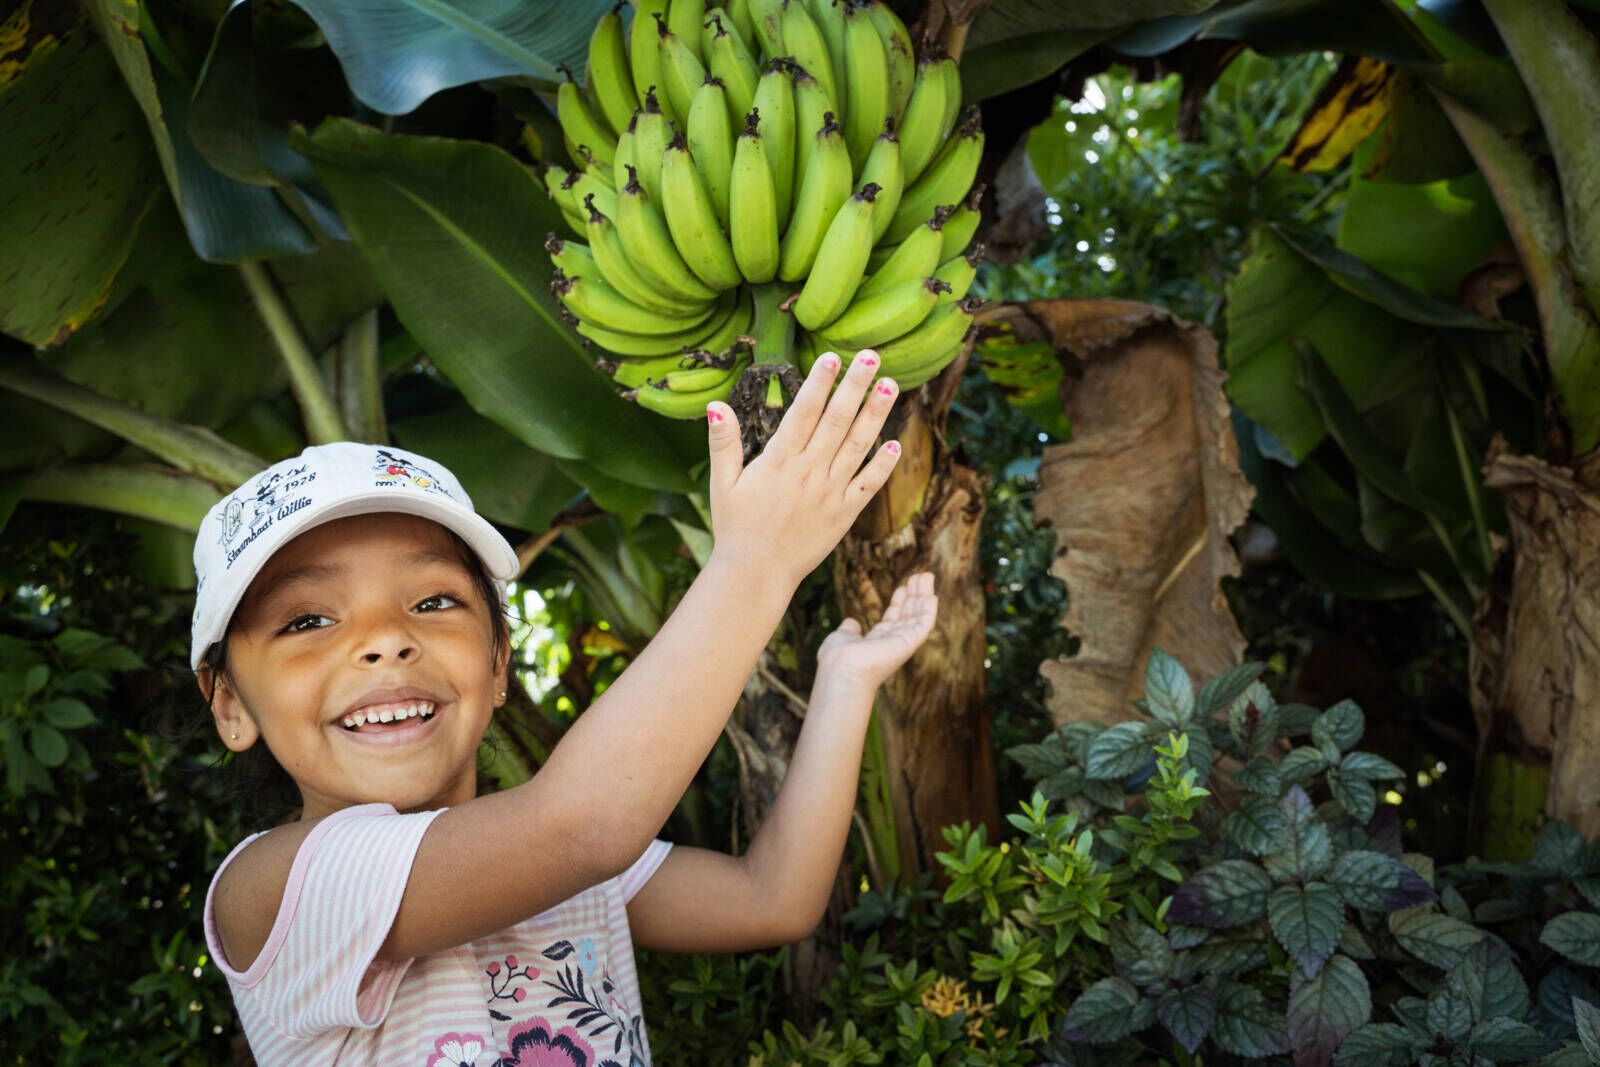 Young girl smiling and motioning towards hanging bananas at Naples Botanical Gardens in Naples, Florida.